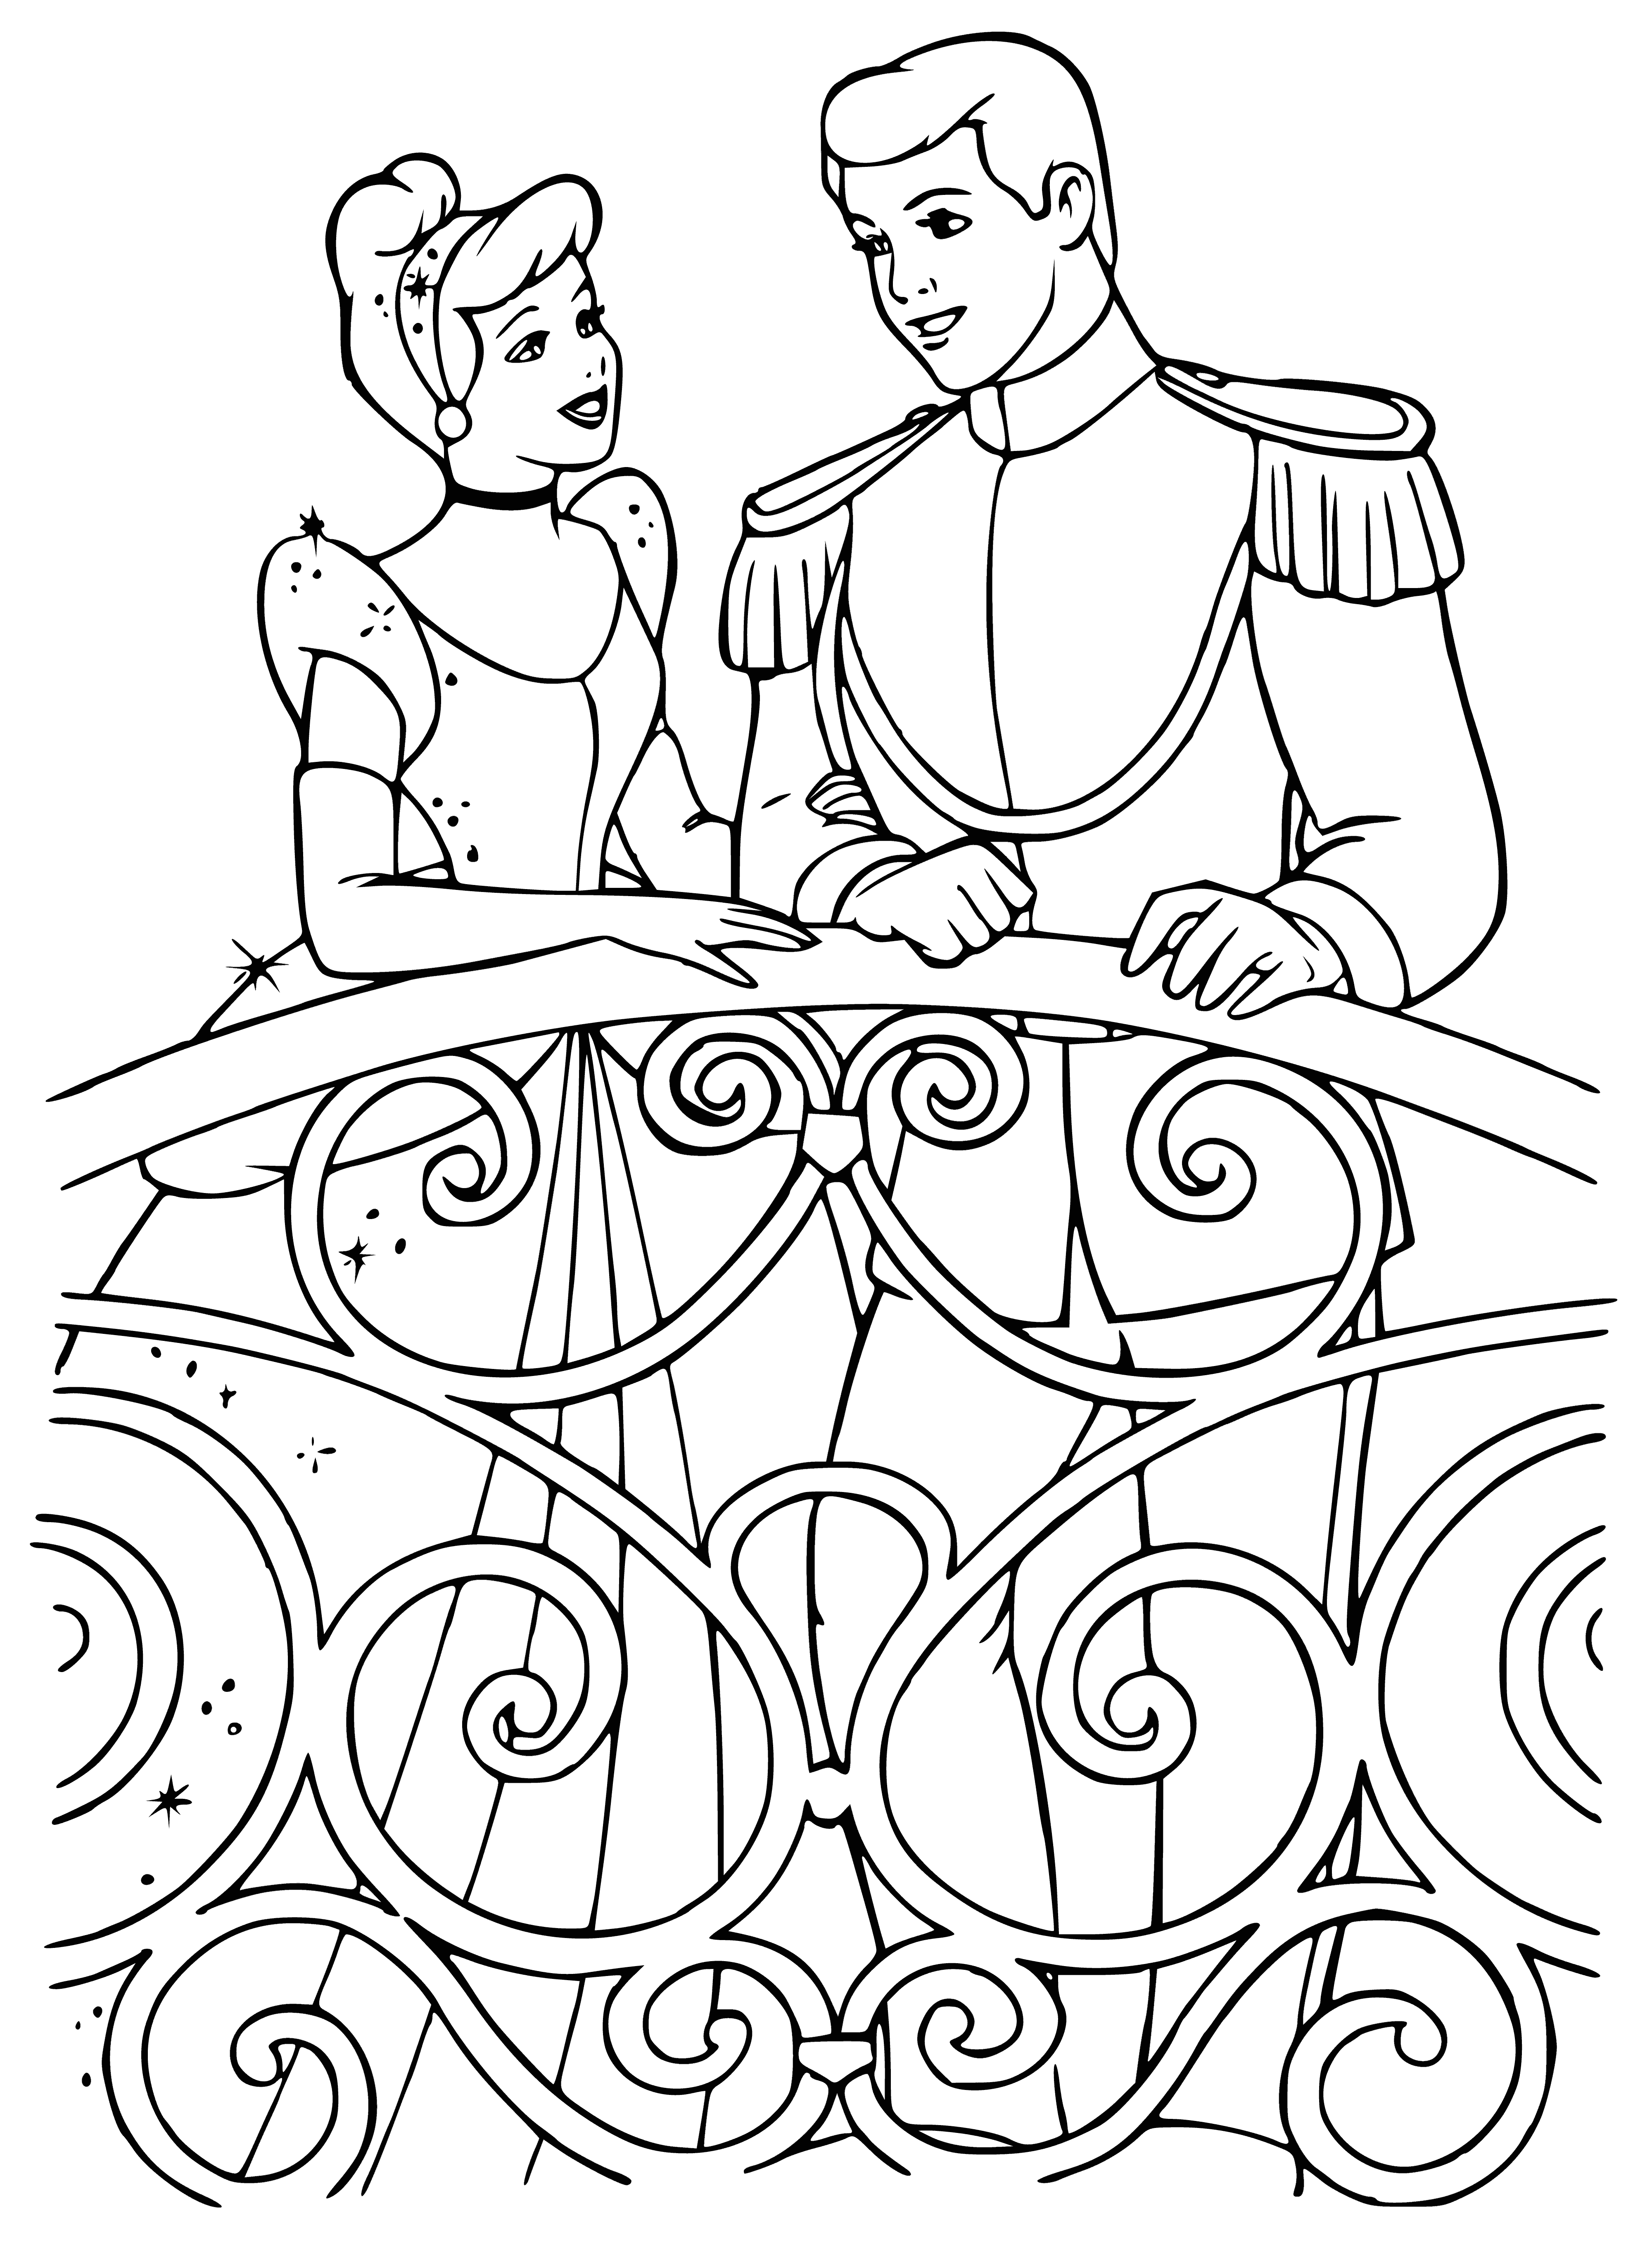 Prince and Cinderella coloring page